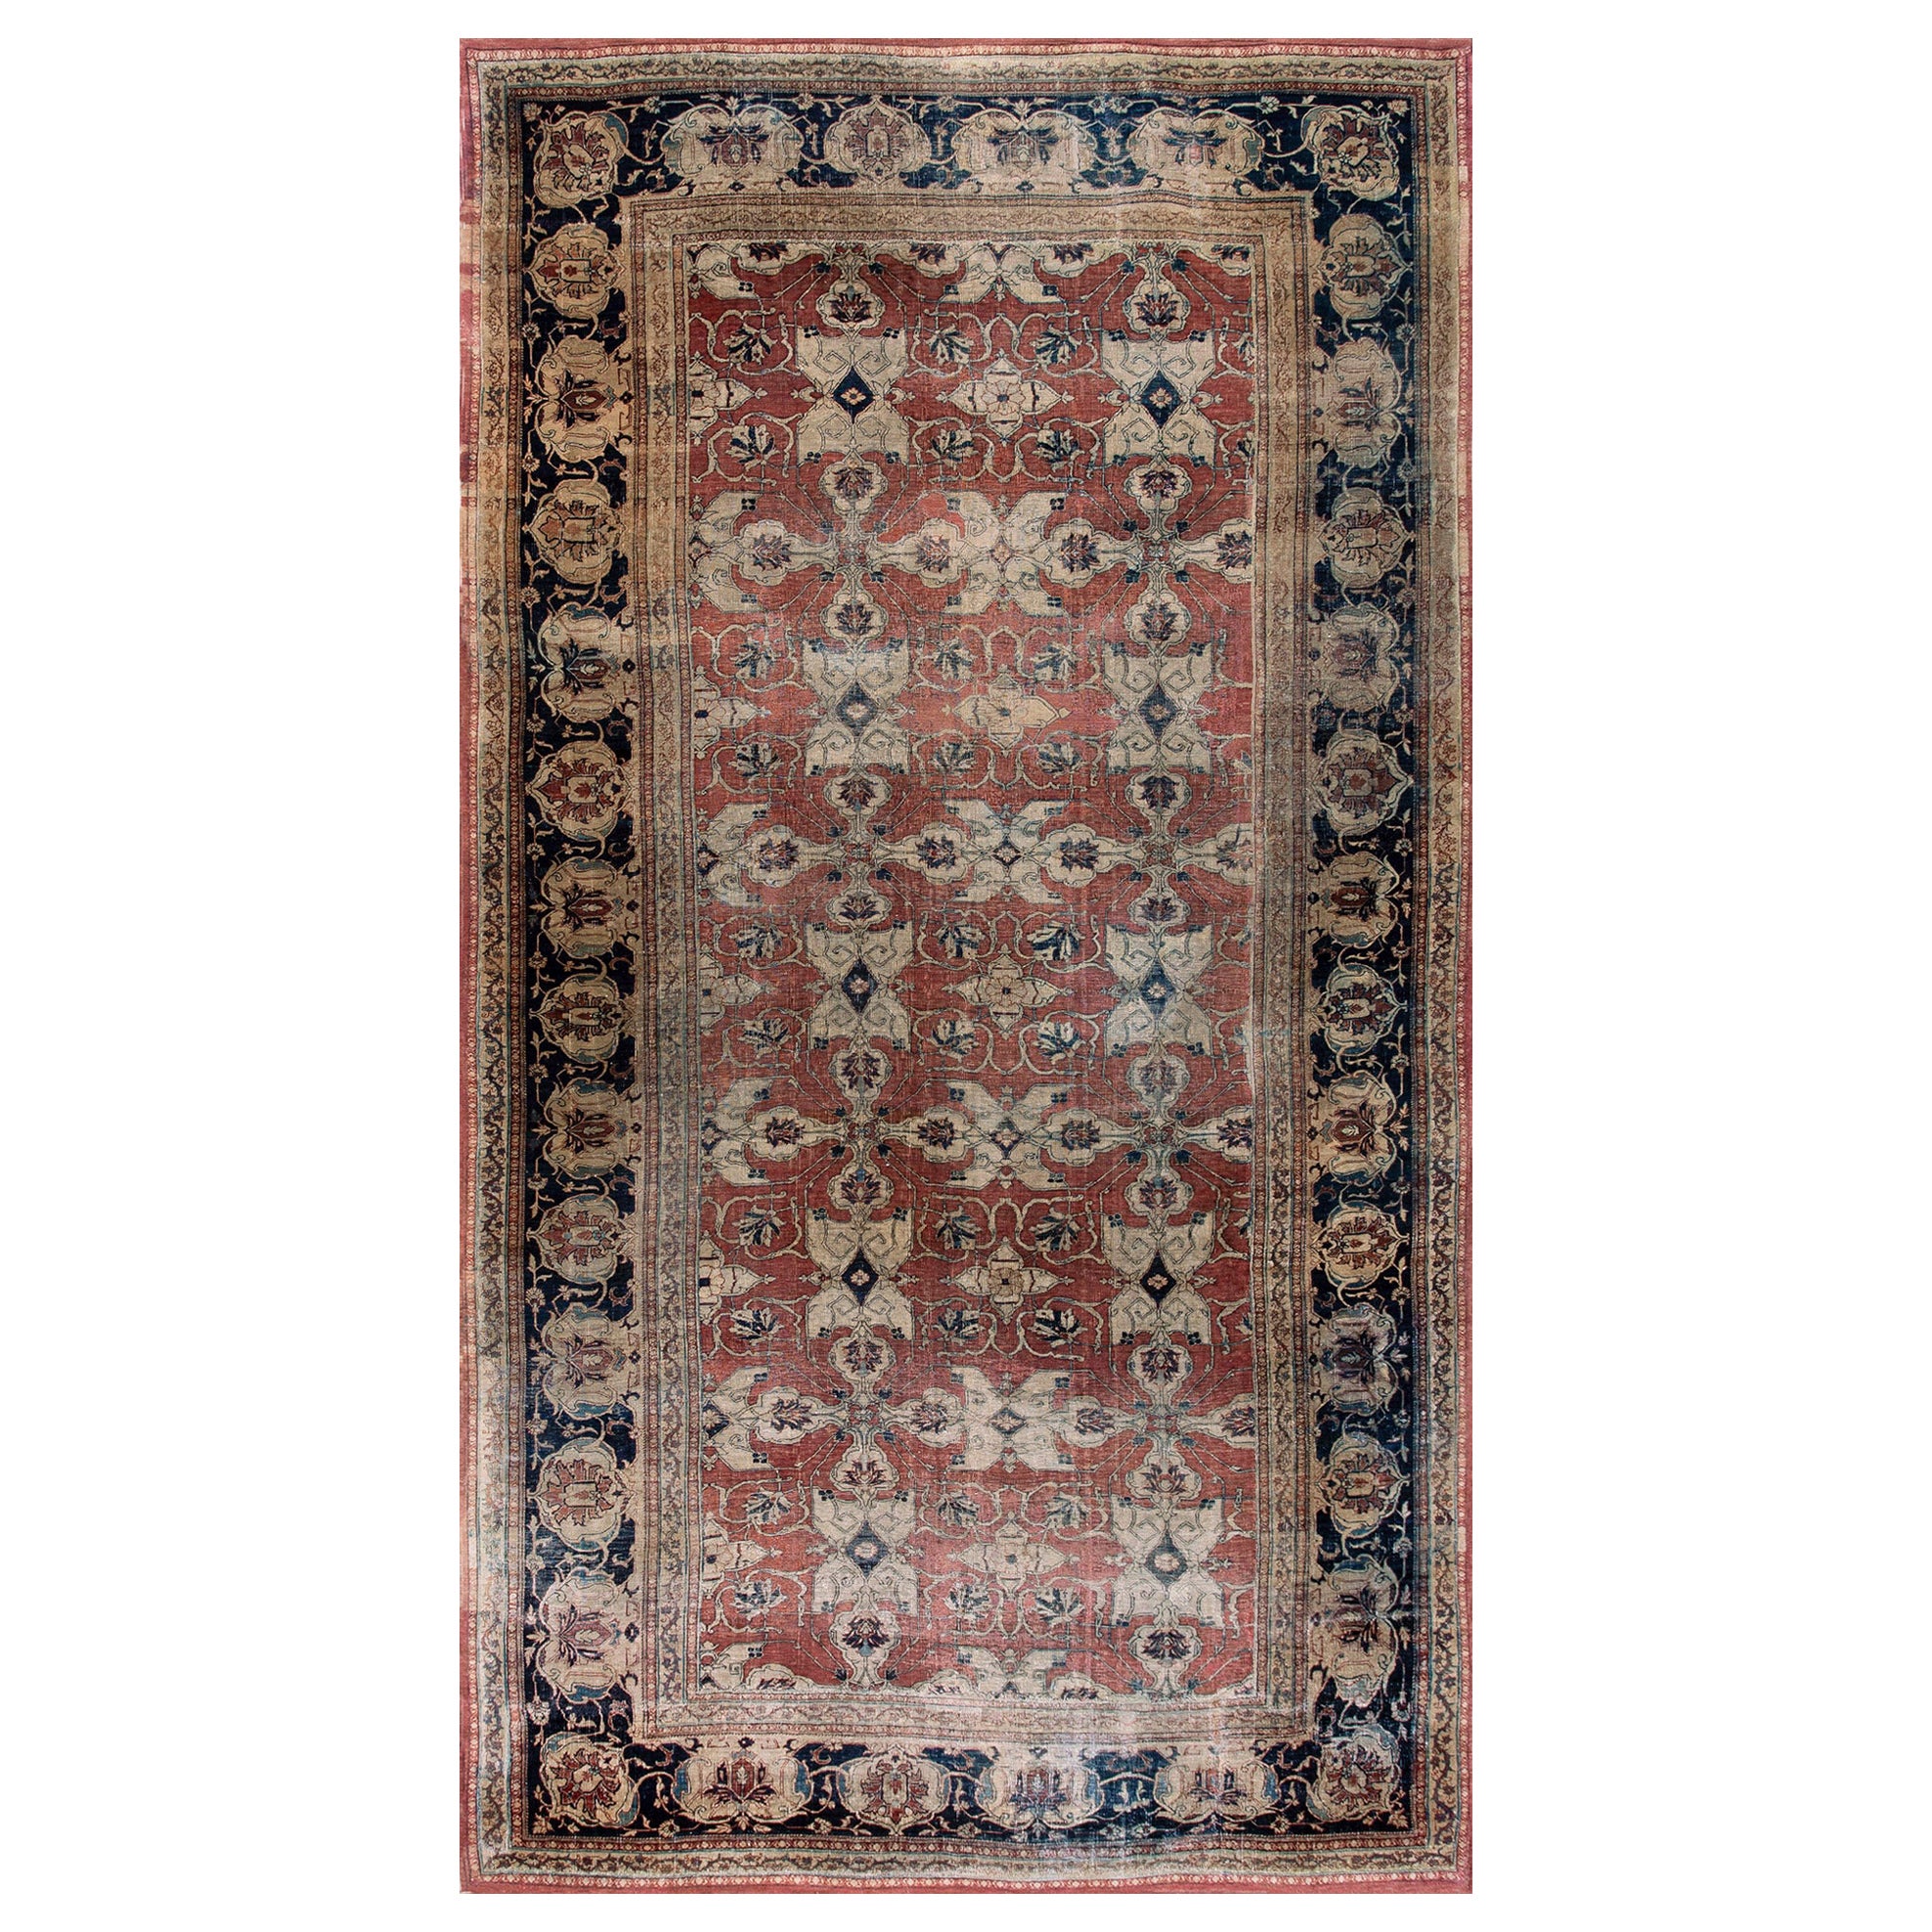 19th Century Persian Tabriz Haji Jalili Carpet 7' 8"x 14' 3" For Sale